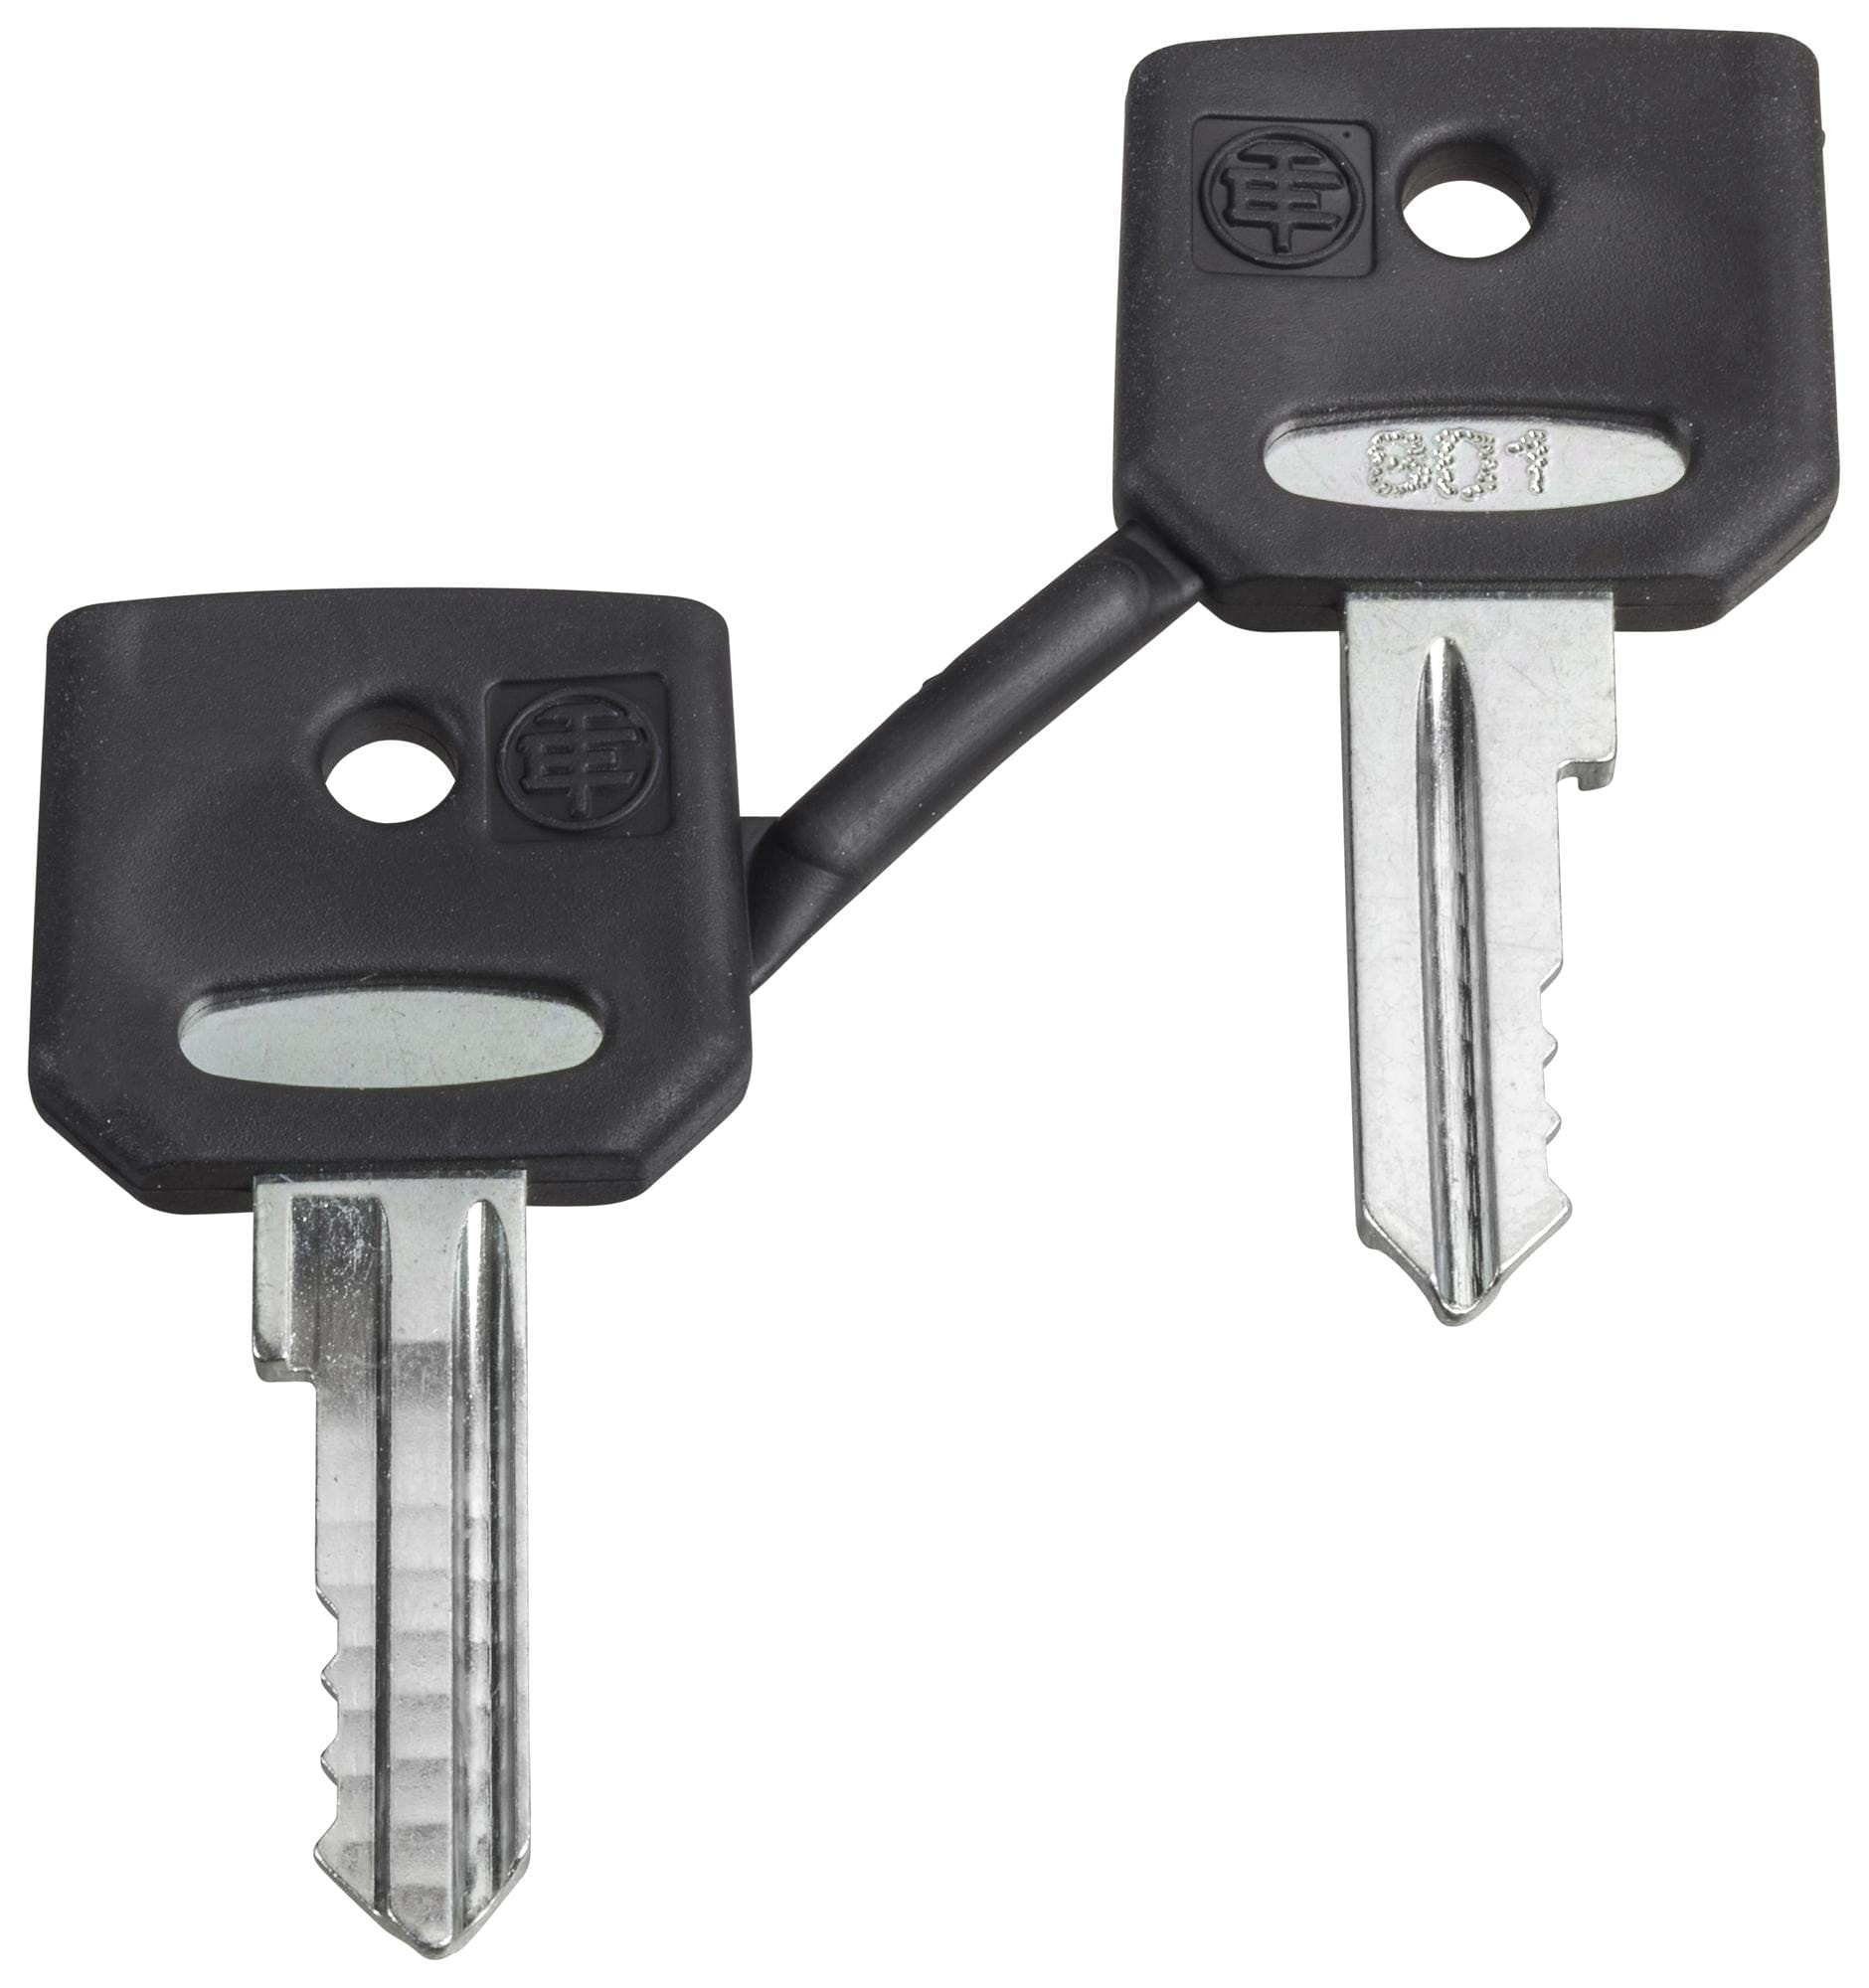 SCHNEIDER ELECTRIC Keys ZBG455P KEY, BOOTED SELECTOR SWITCH SCHNEIDER ELECTRIC 3114440 ZBG455P